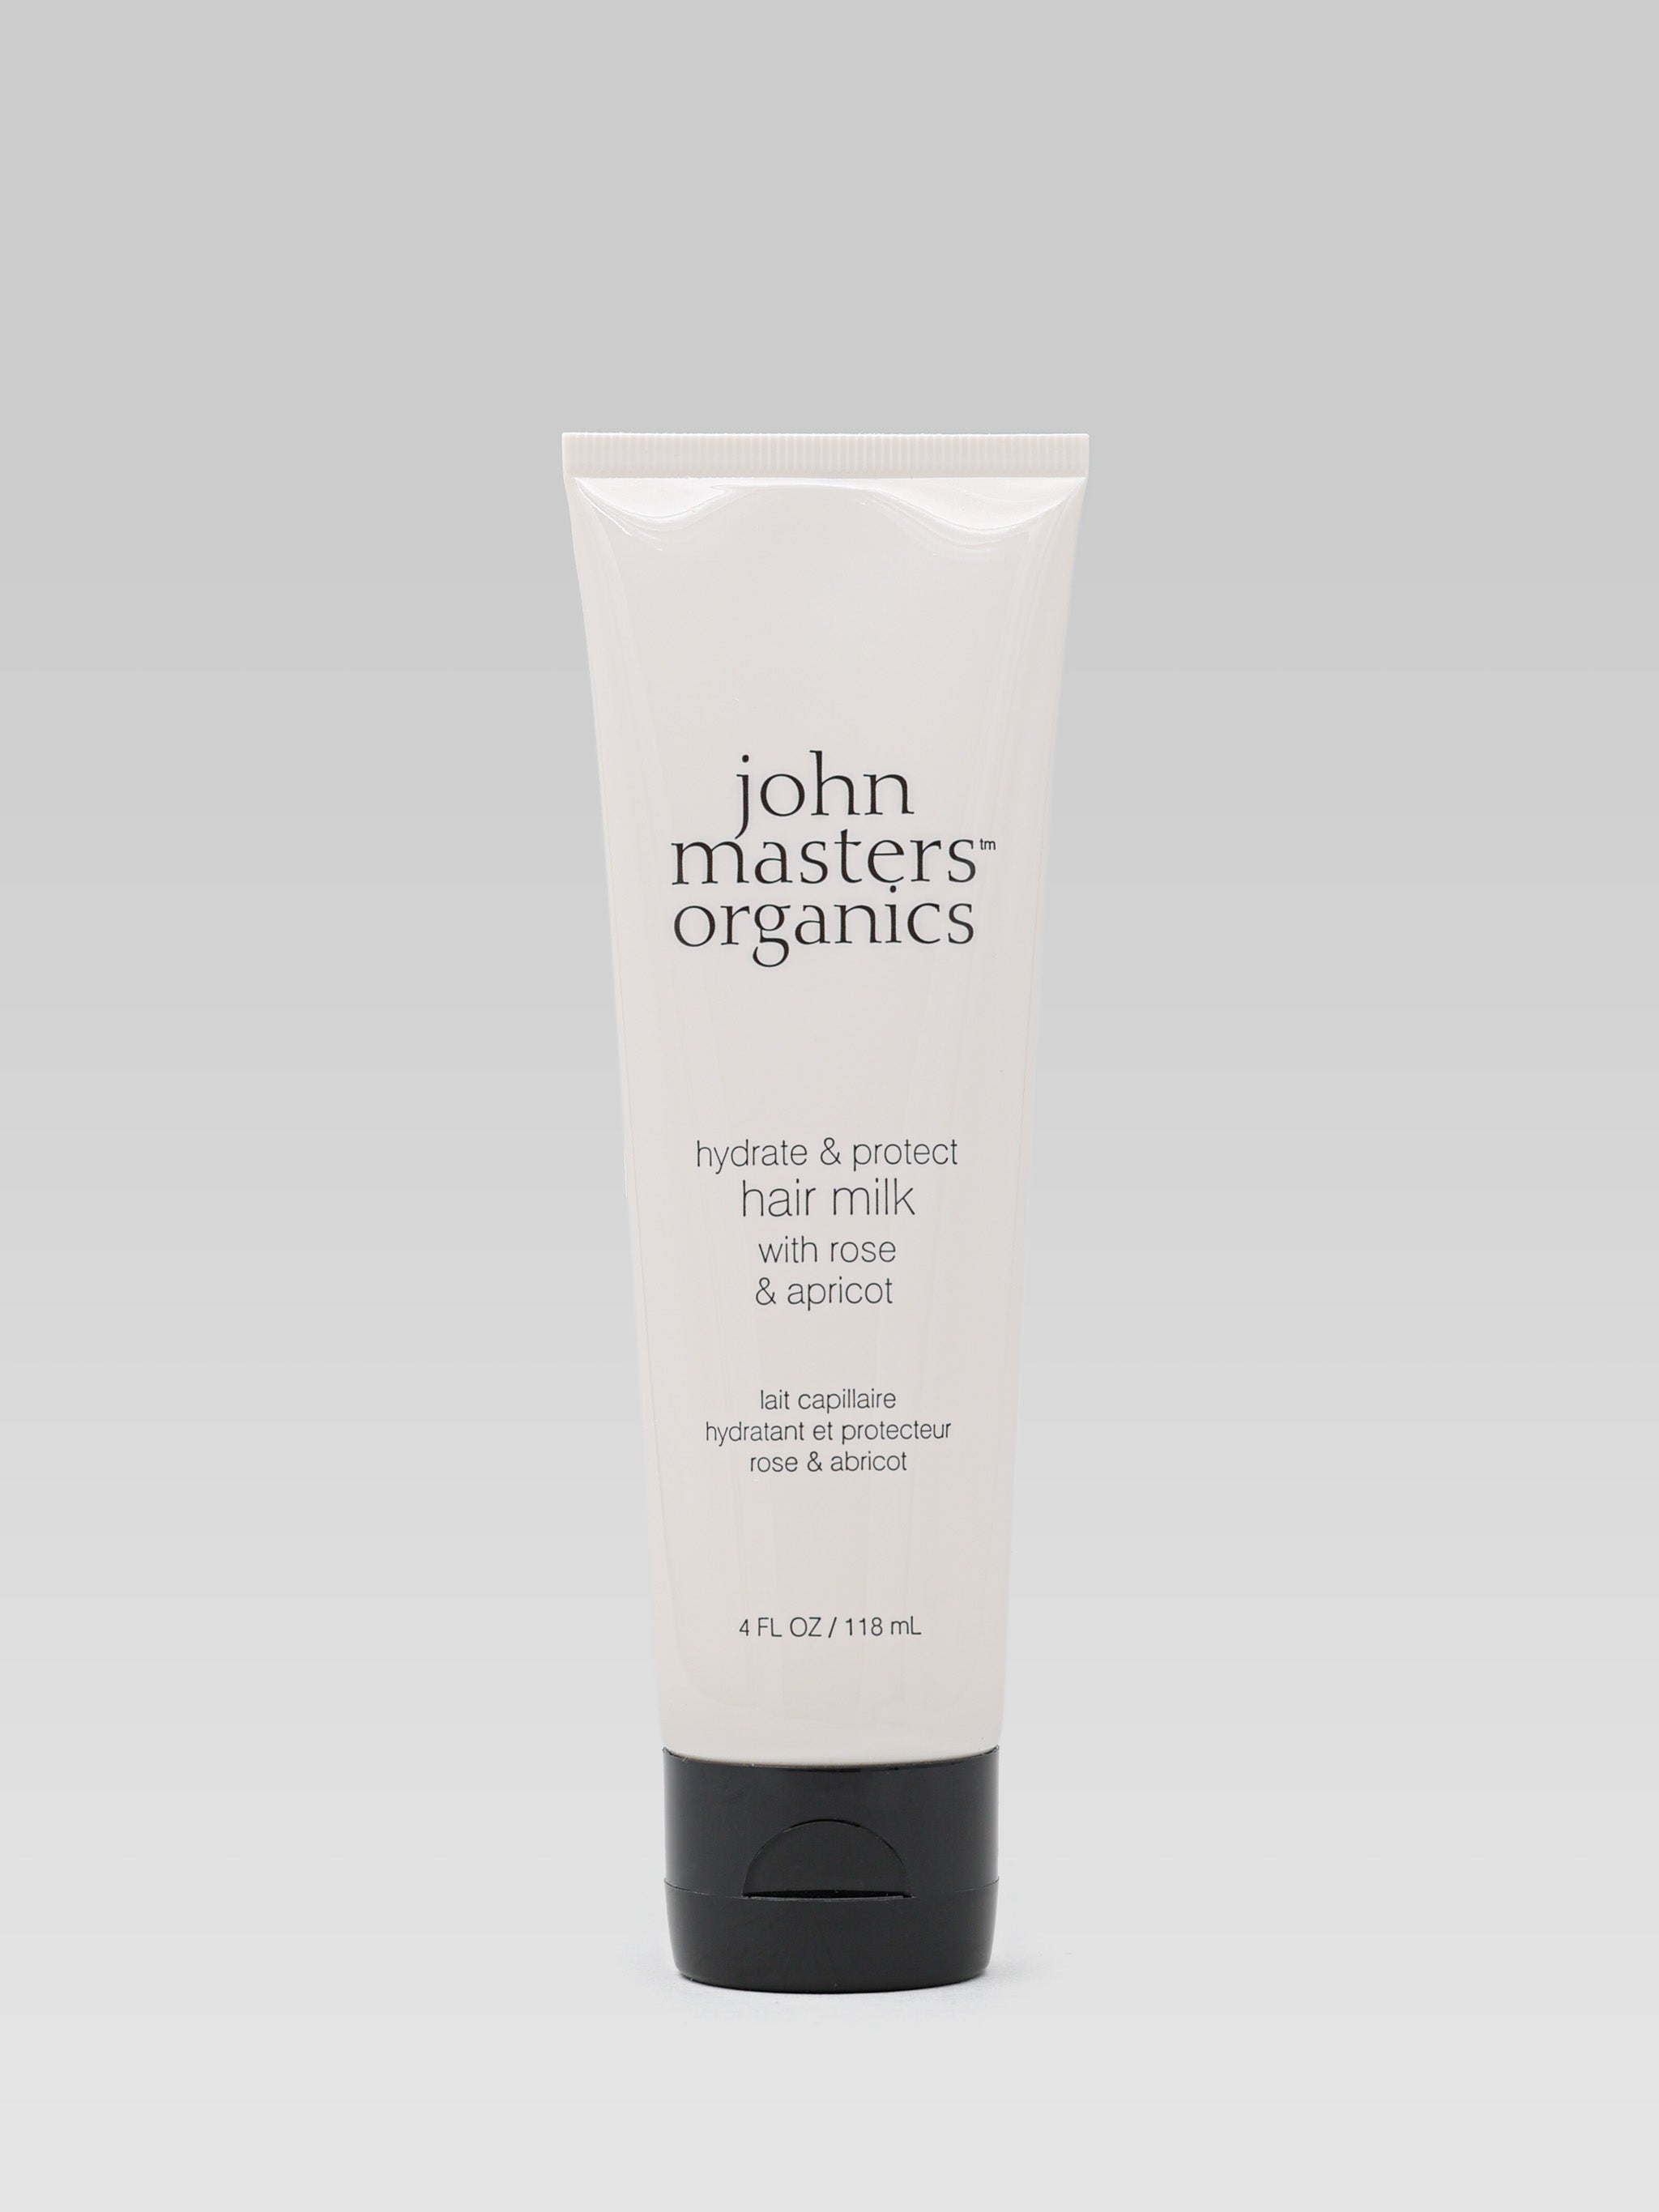 JOHN MASTERS ORGANICS Hydrate and Protect Hair Milk product shot